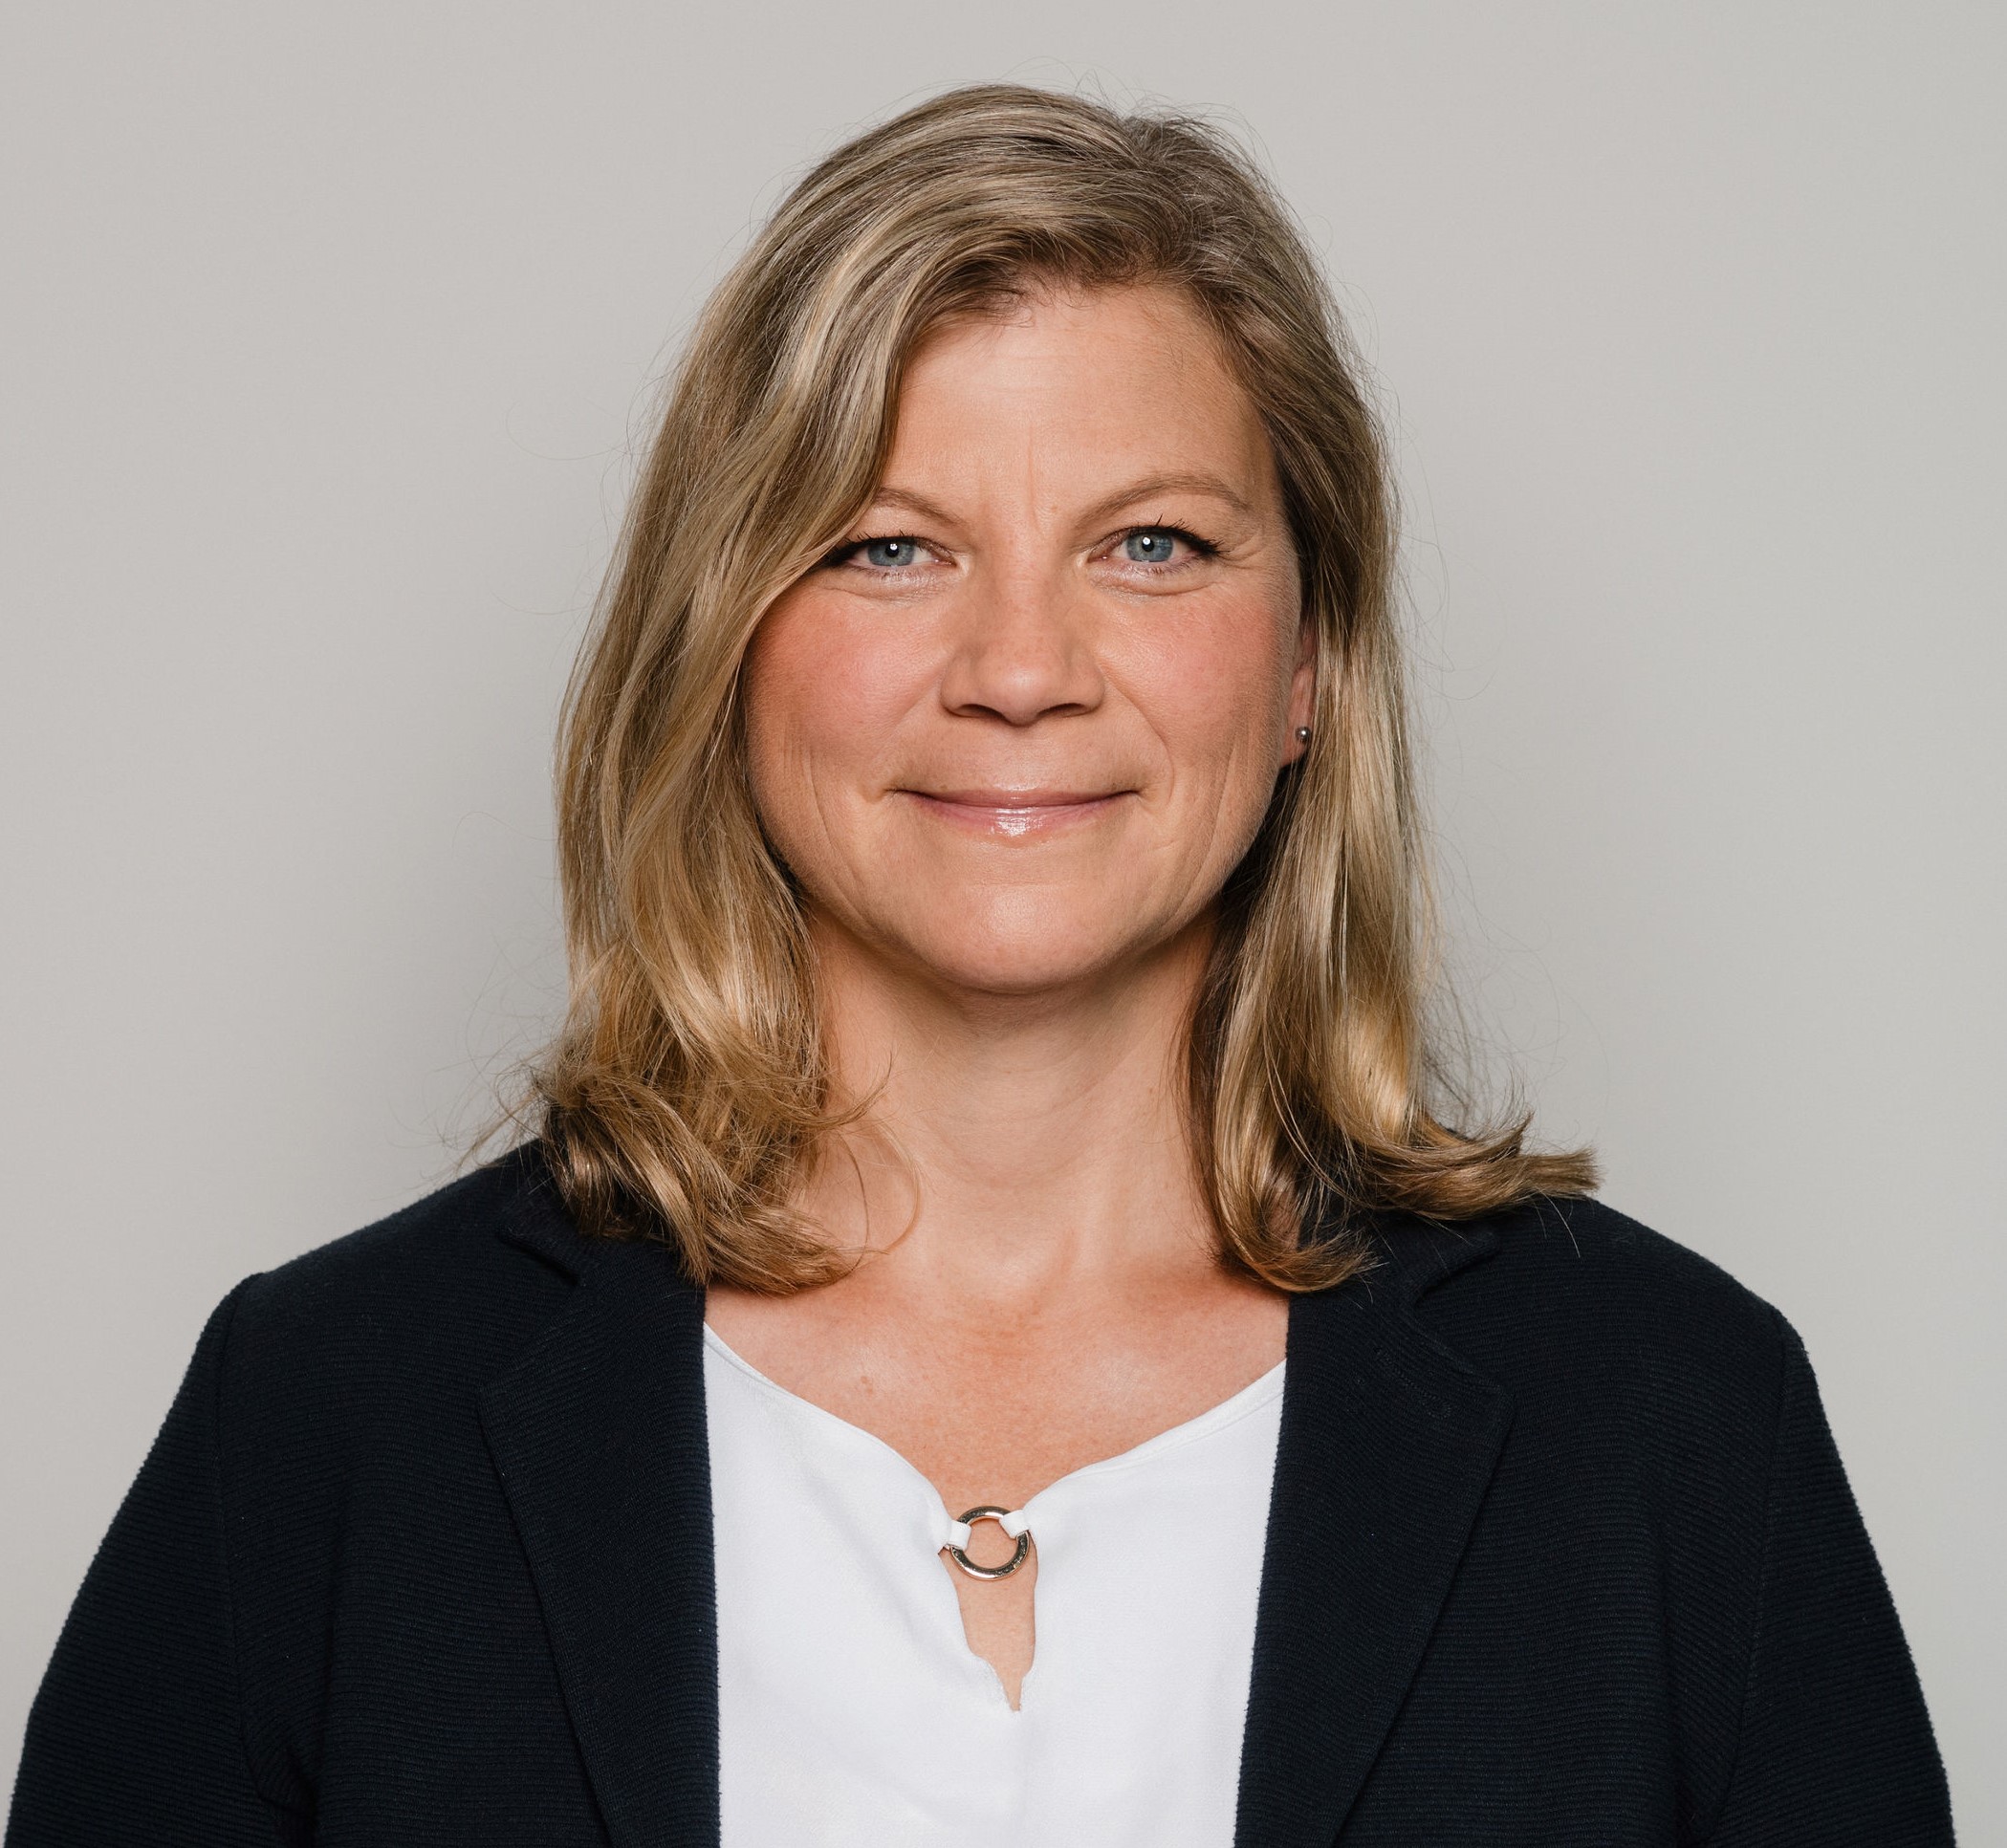 Marion Rottenberg ist neuer International Patient Advocacy Lead bei AOP Health